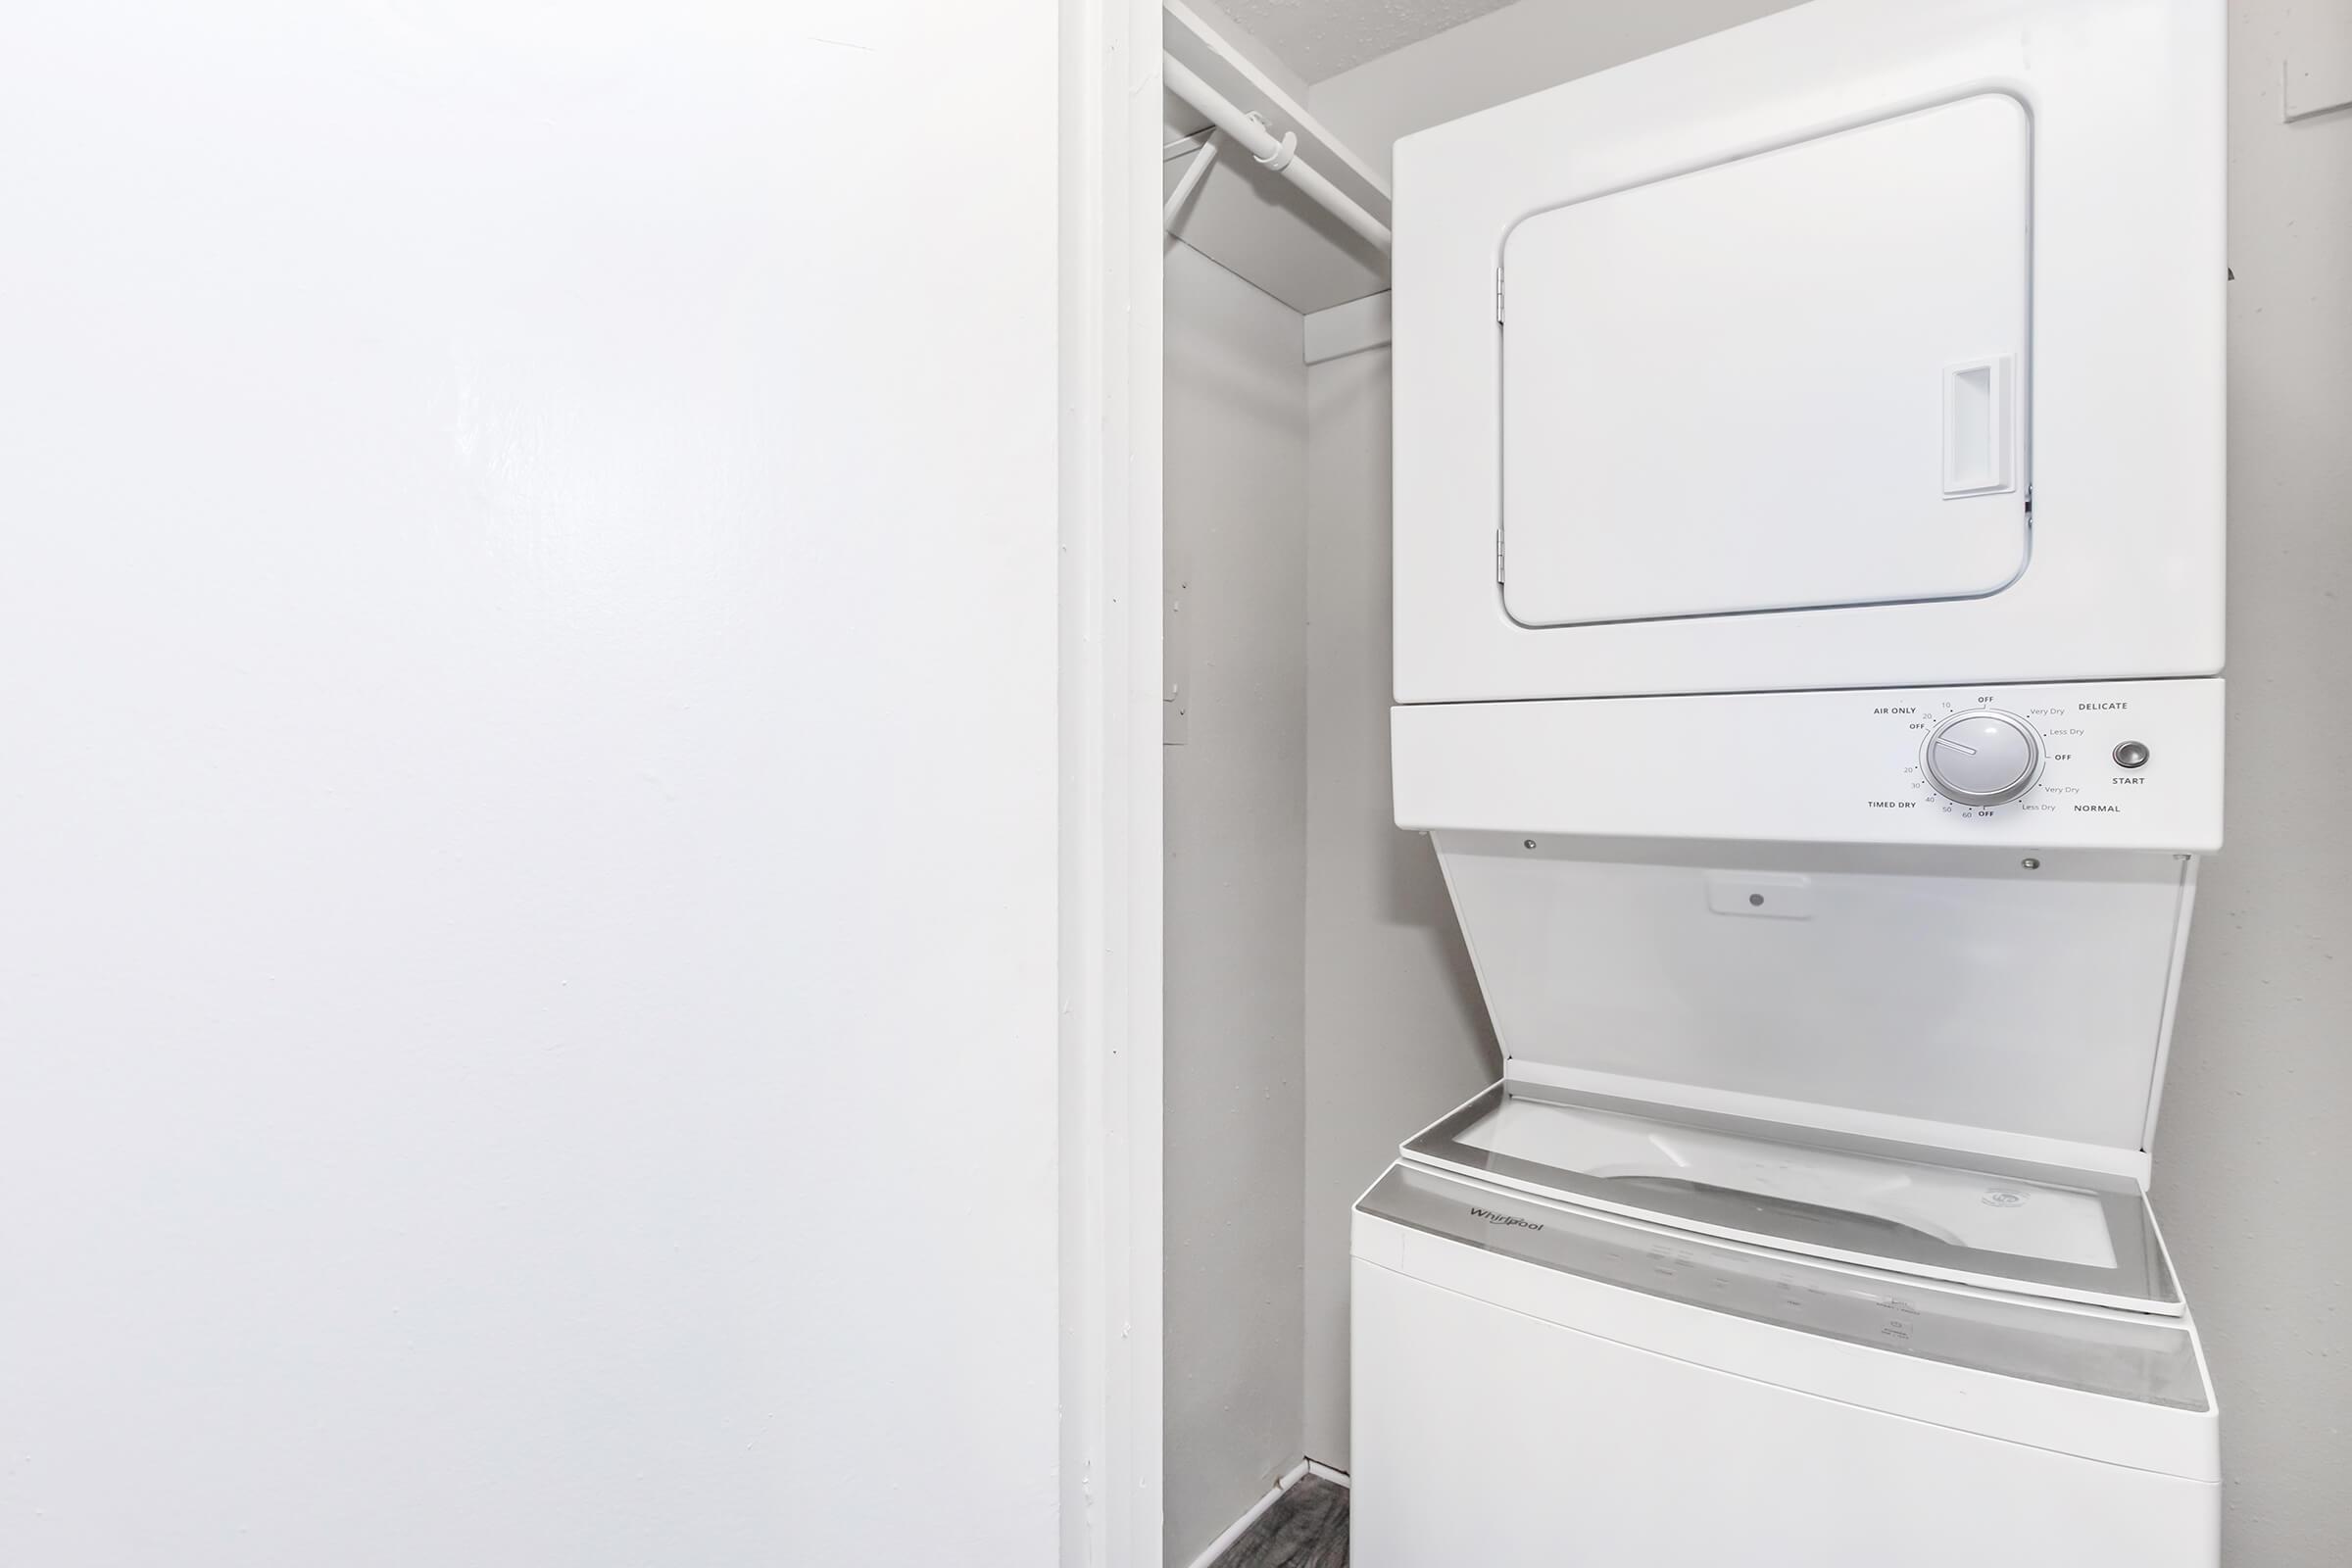 a small refrigerator